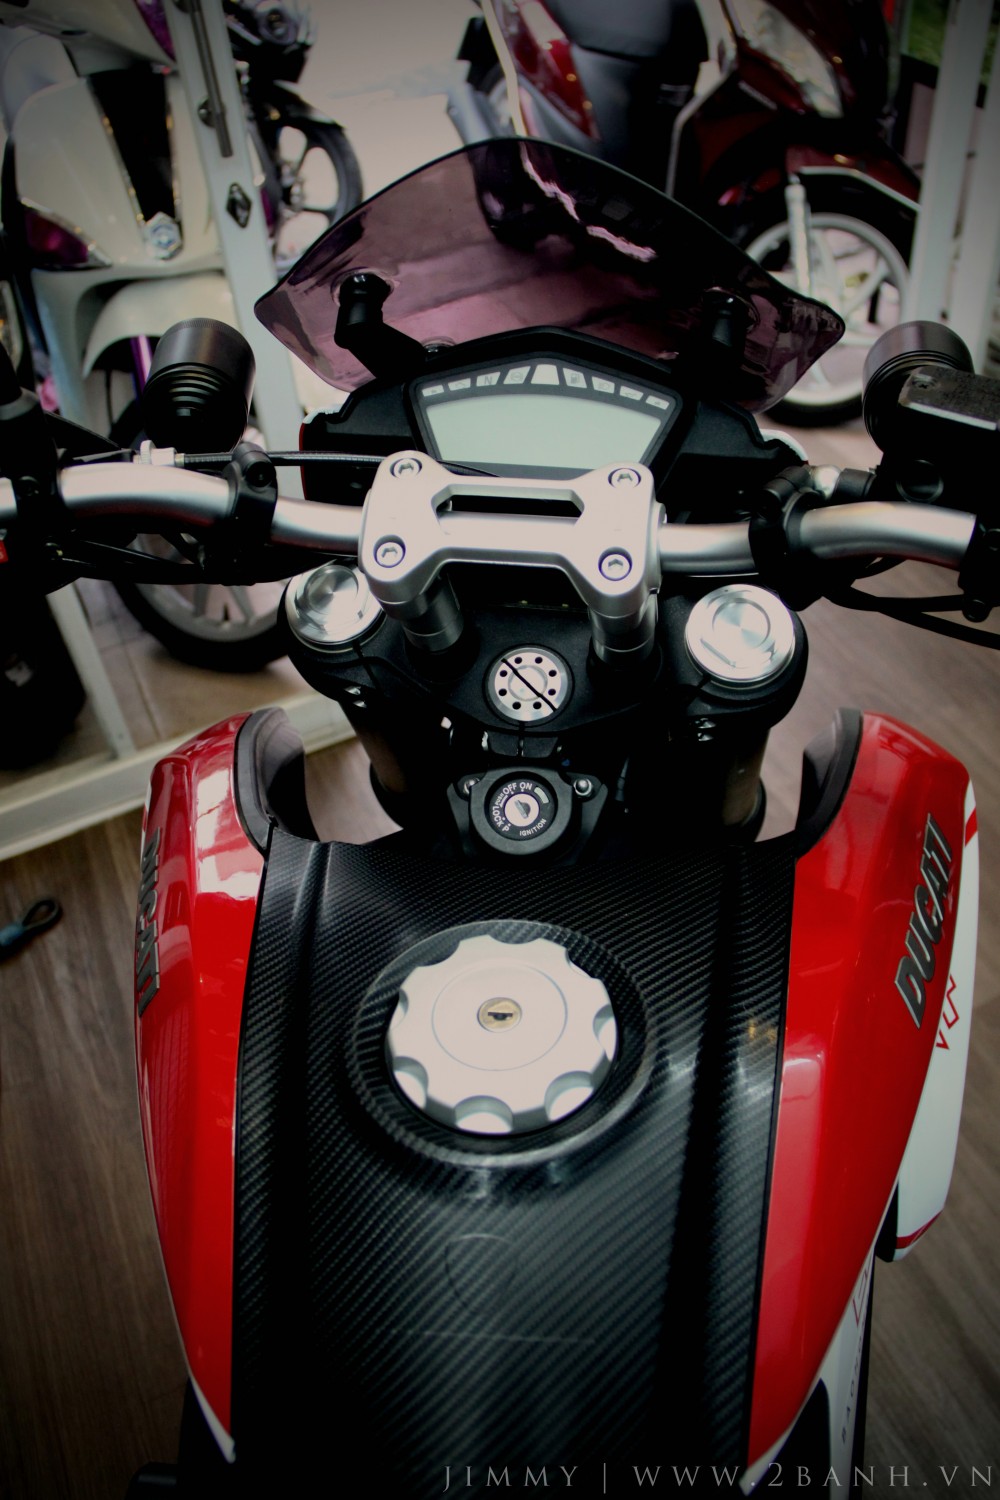 Ducati Hyperstrada lung linh khoe sac - 12